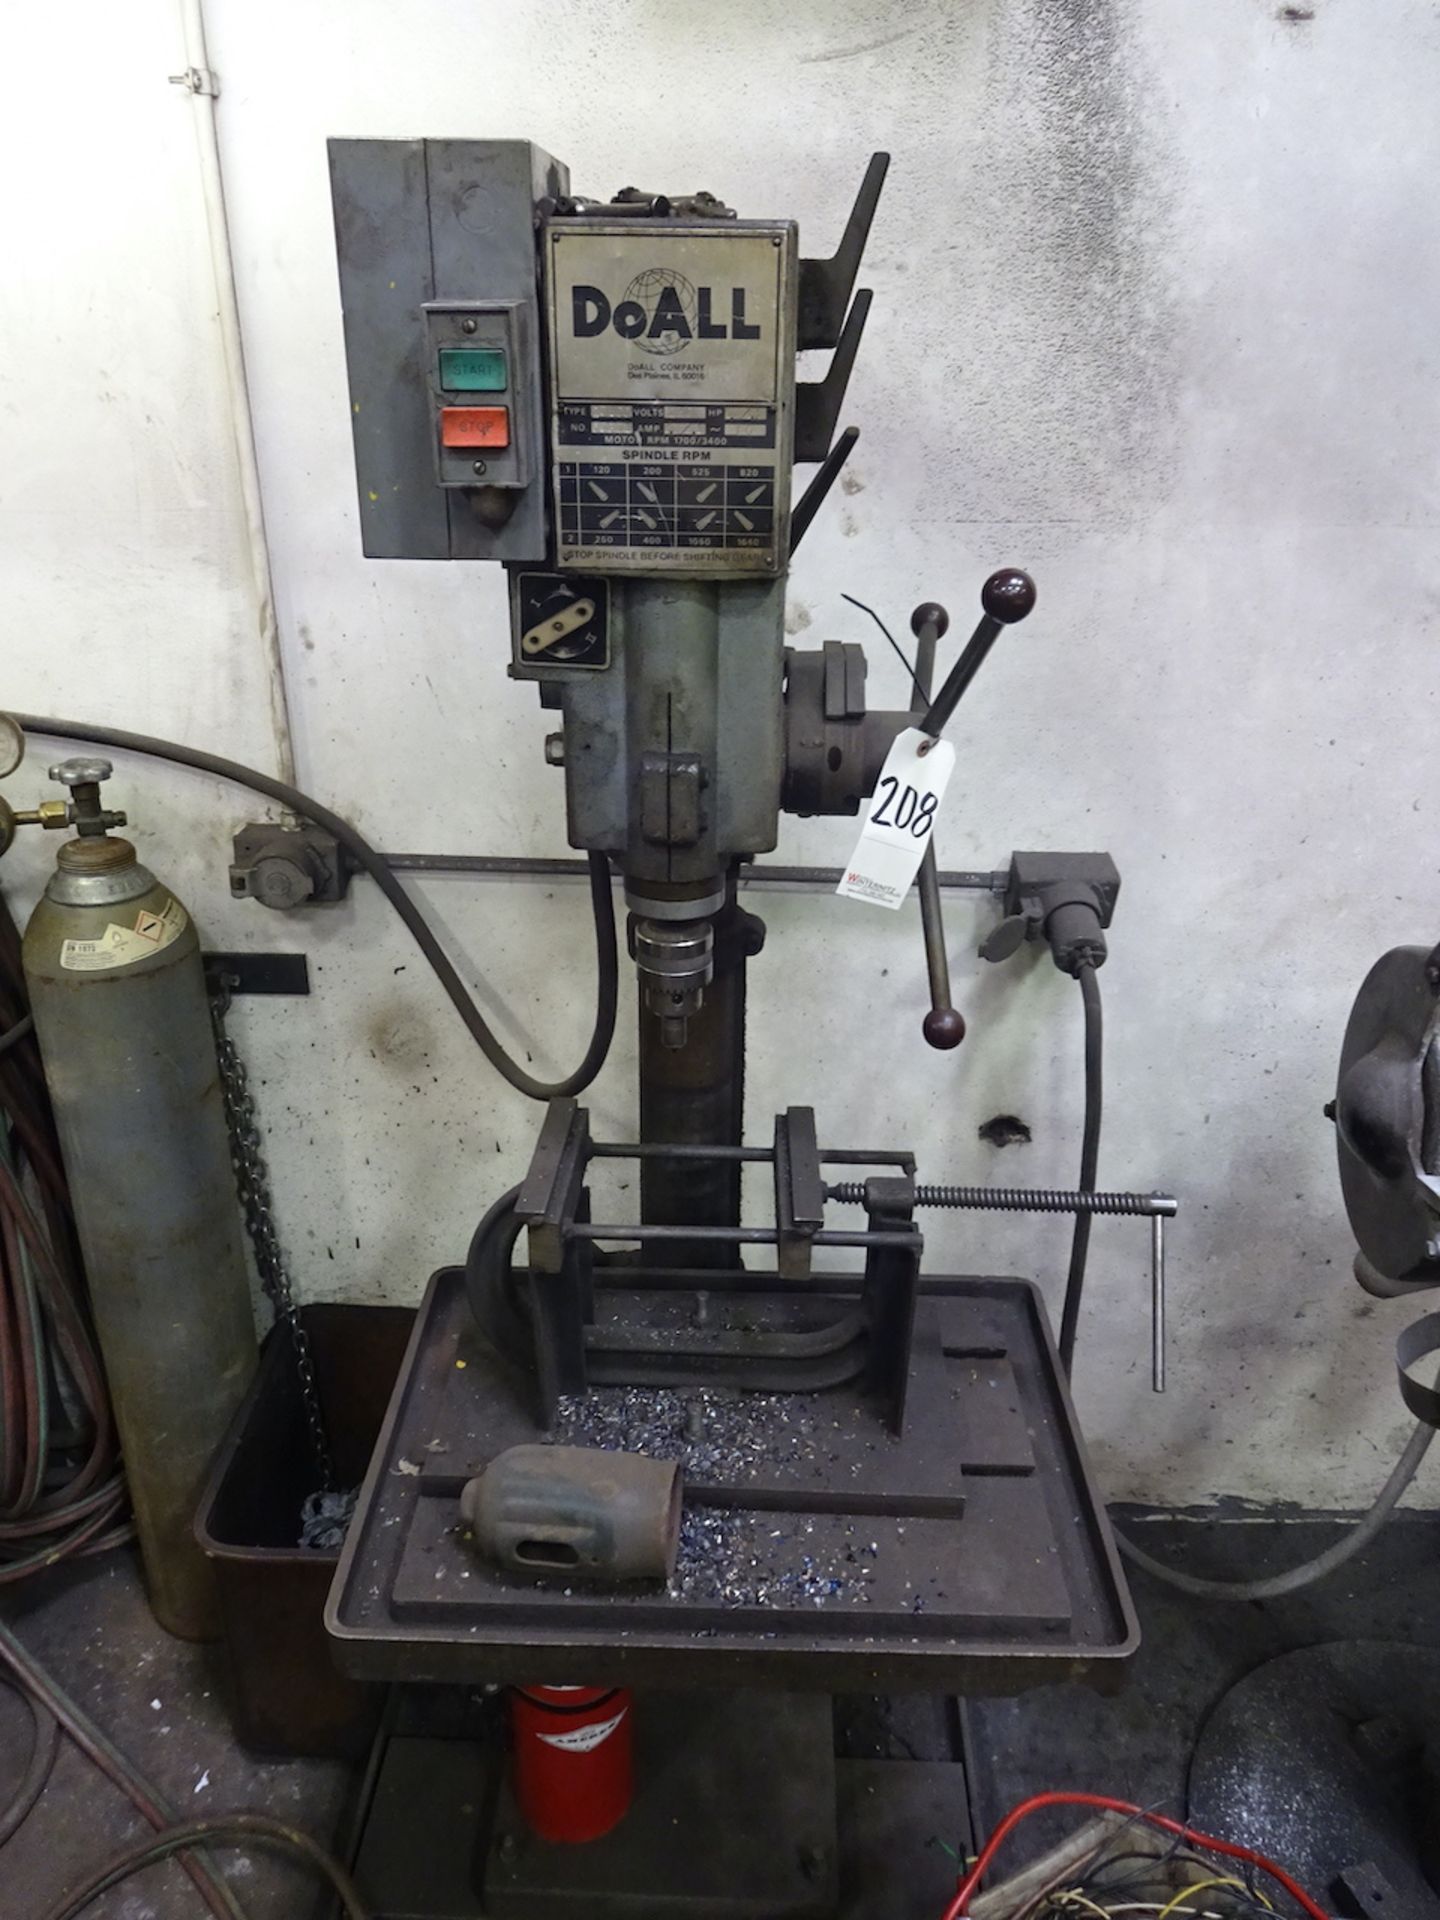 DoAll Type 20100 Geared Head Drill Press, S/N 59801